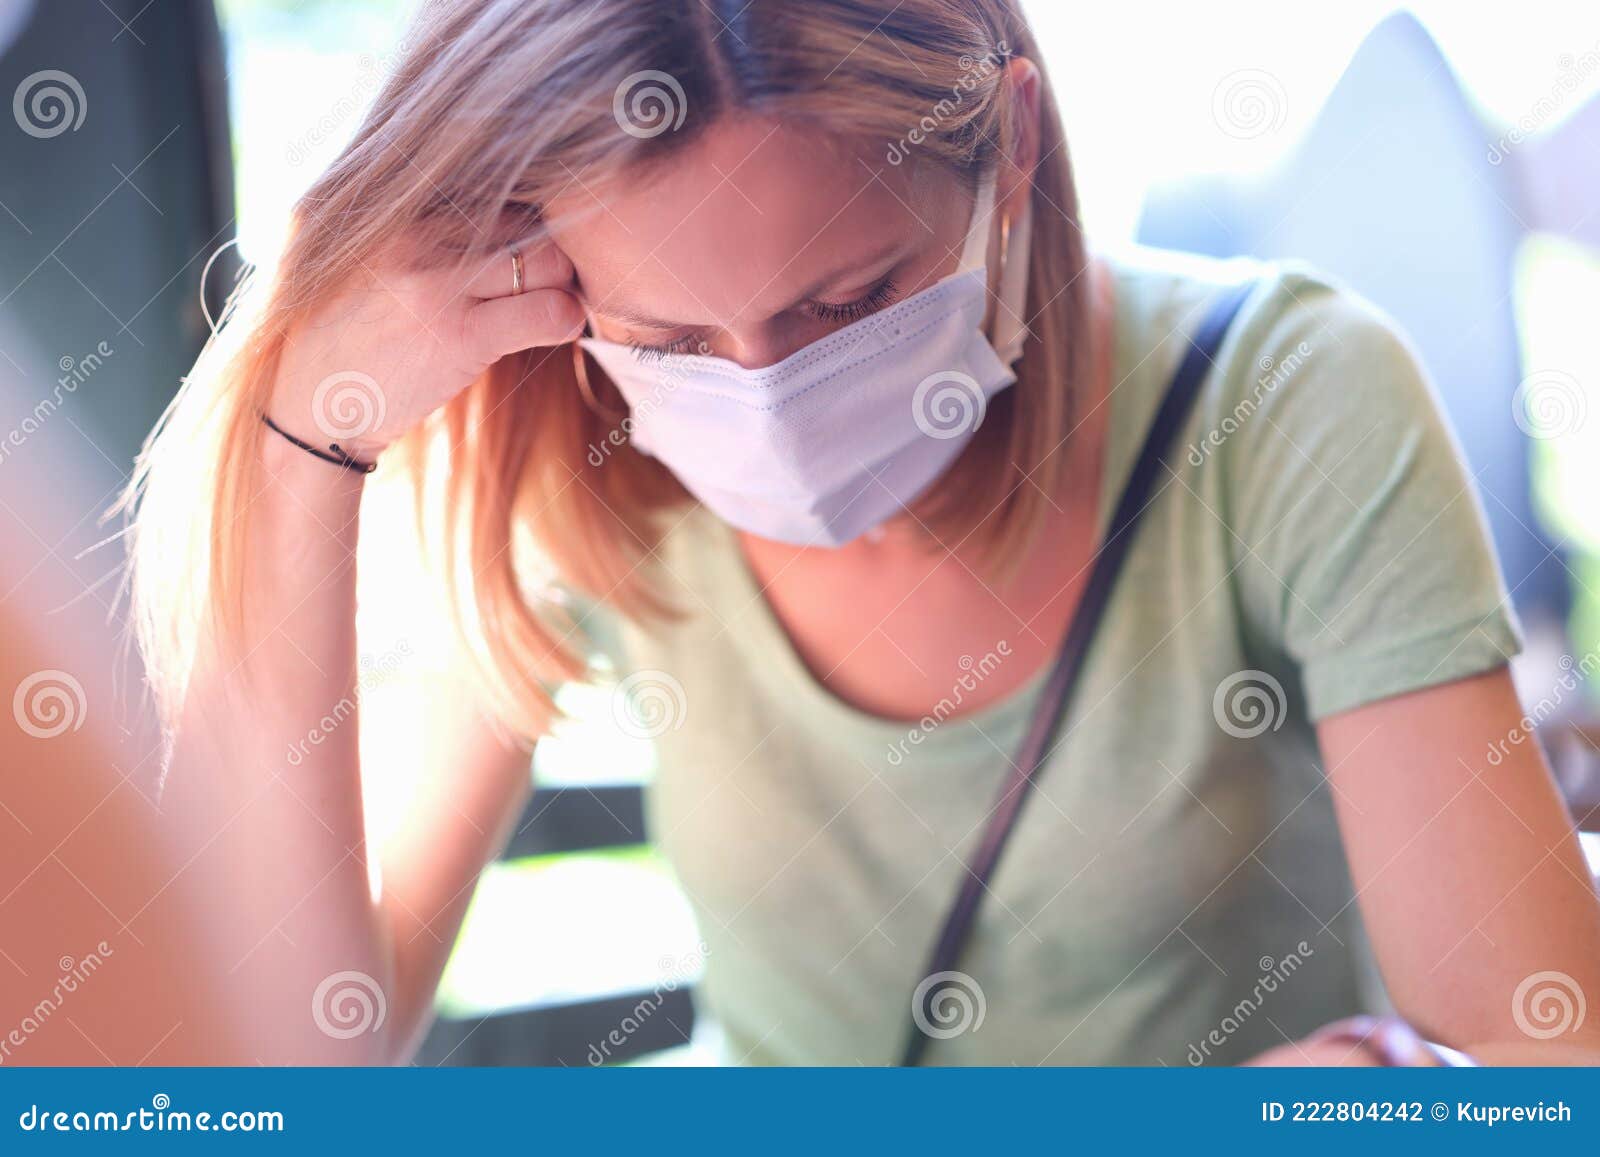 anxious sad woman in medical protective mask sits at table